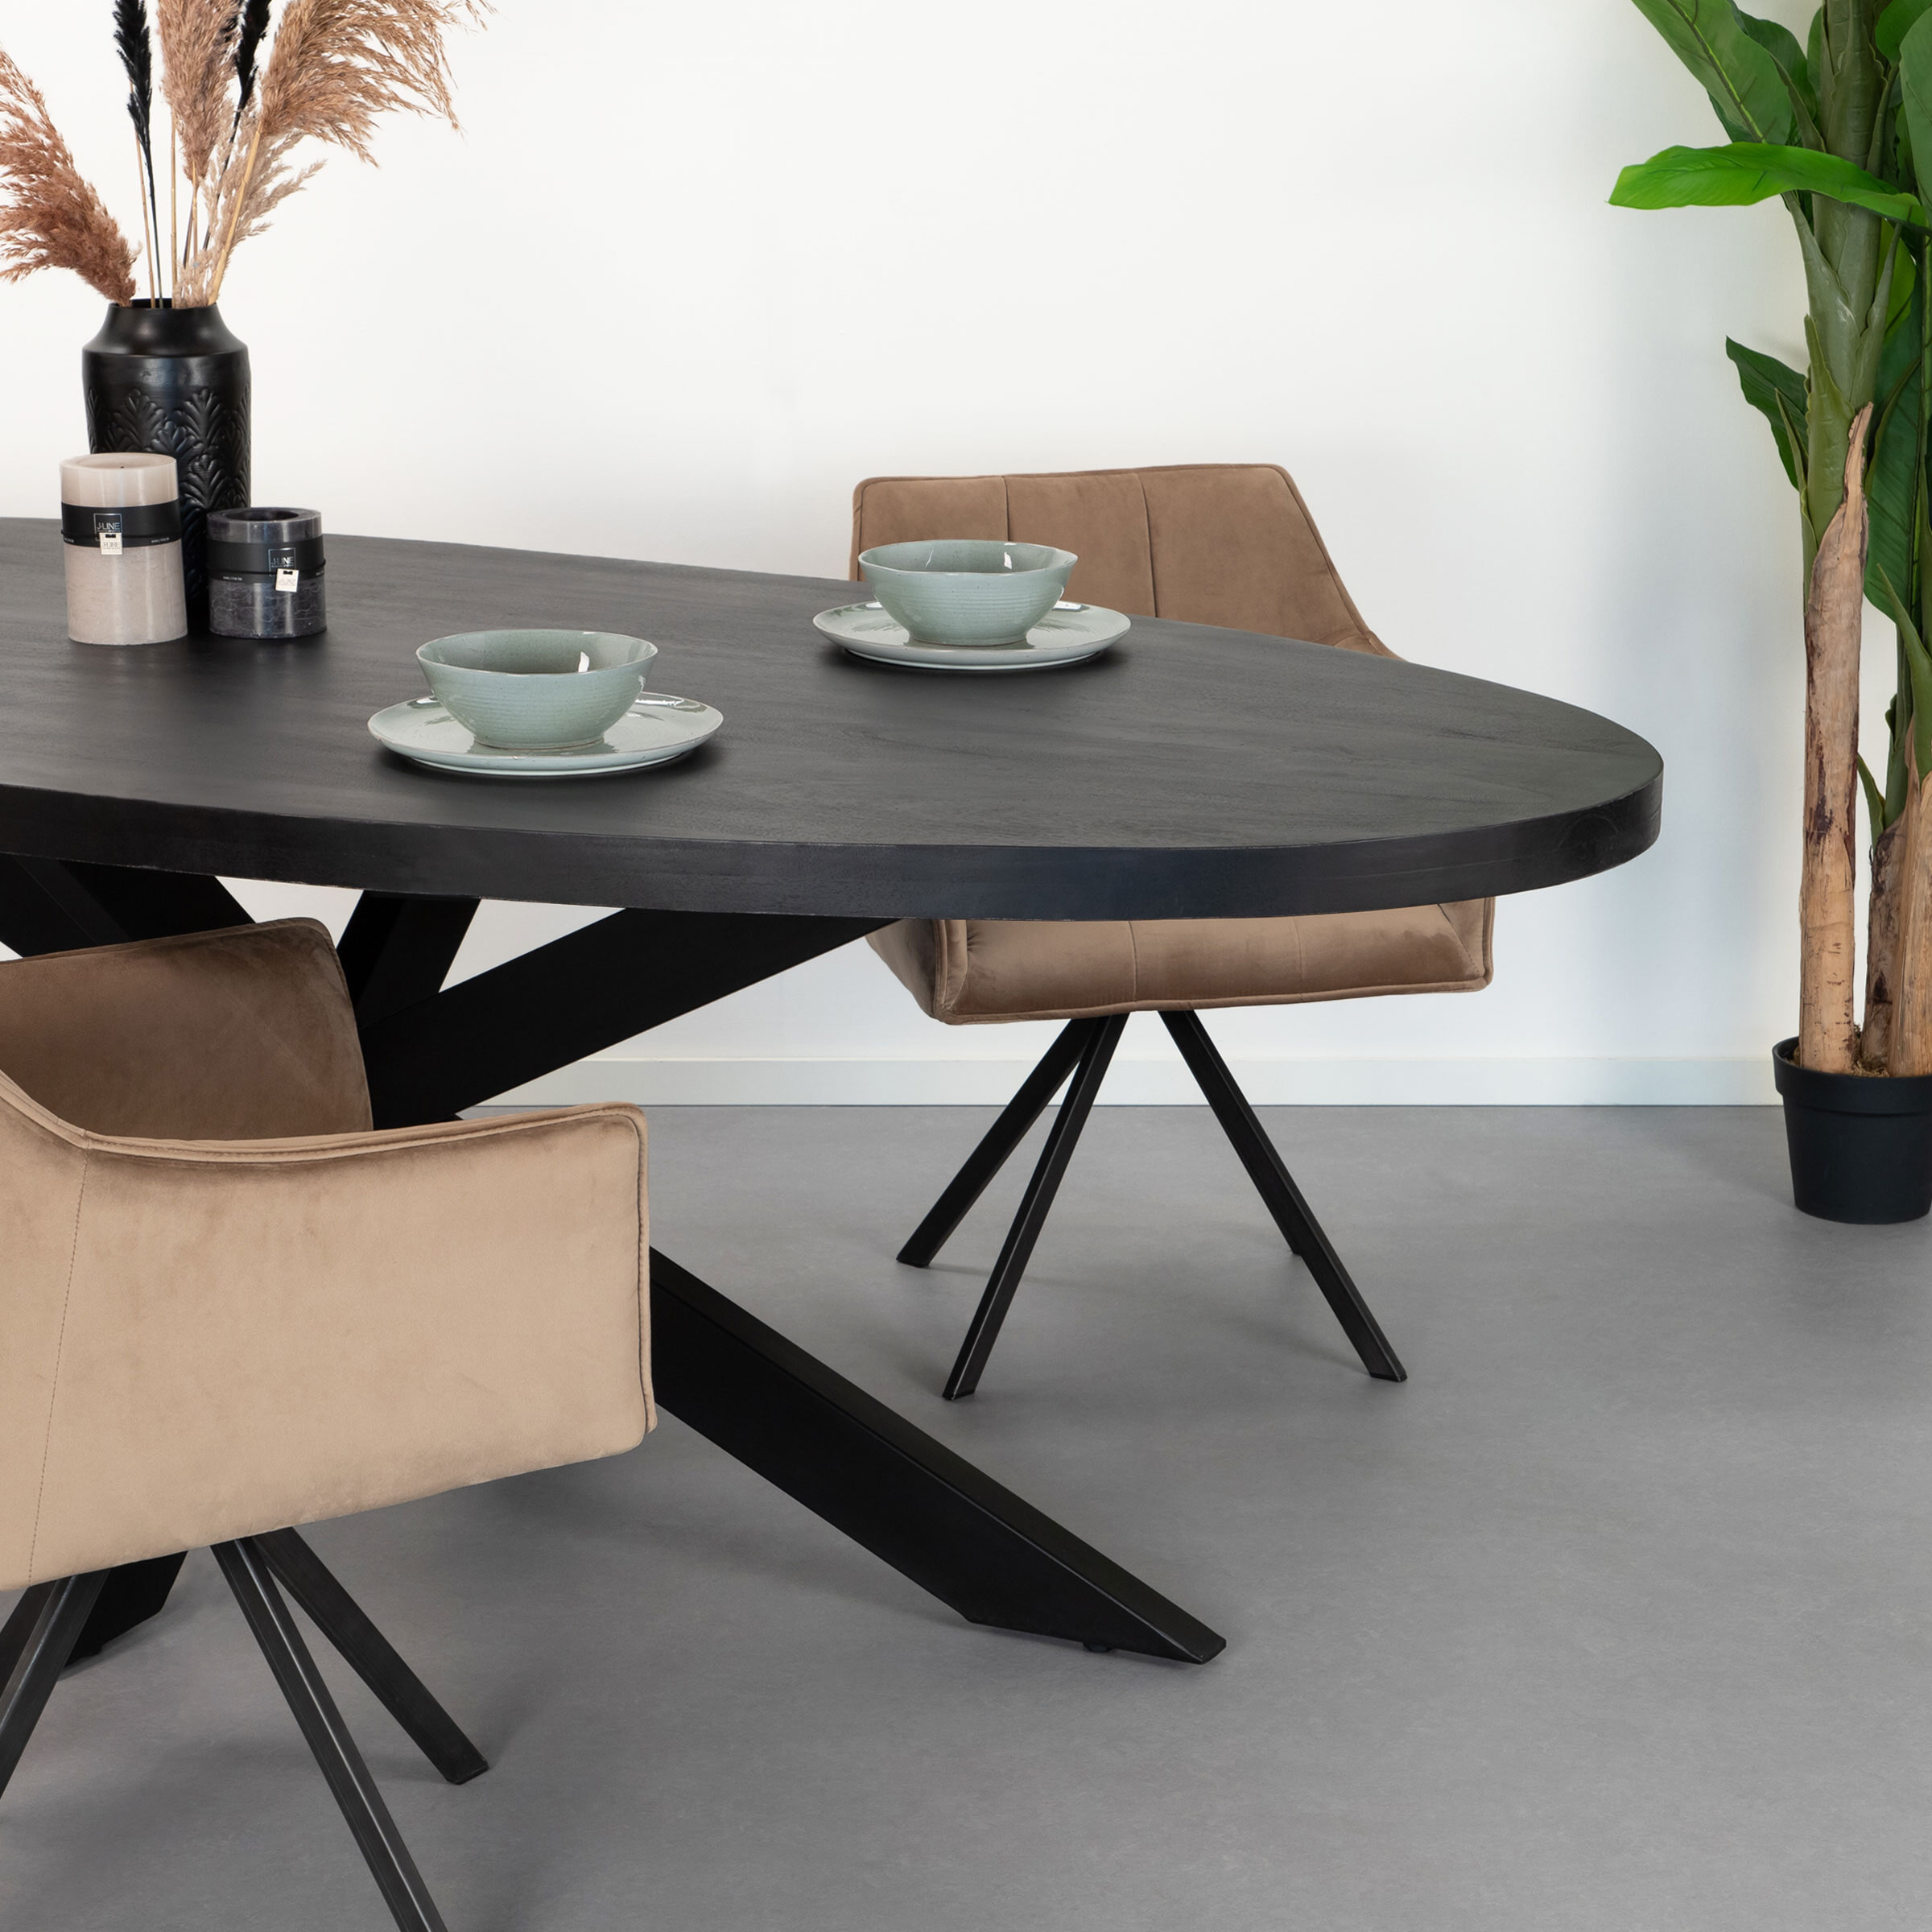 LivingFurn Ovale Eettafel 'Kala Spider' Mangohout en staal, 180 x 90cm, kleur zwart